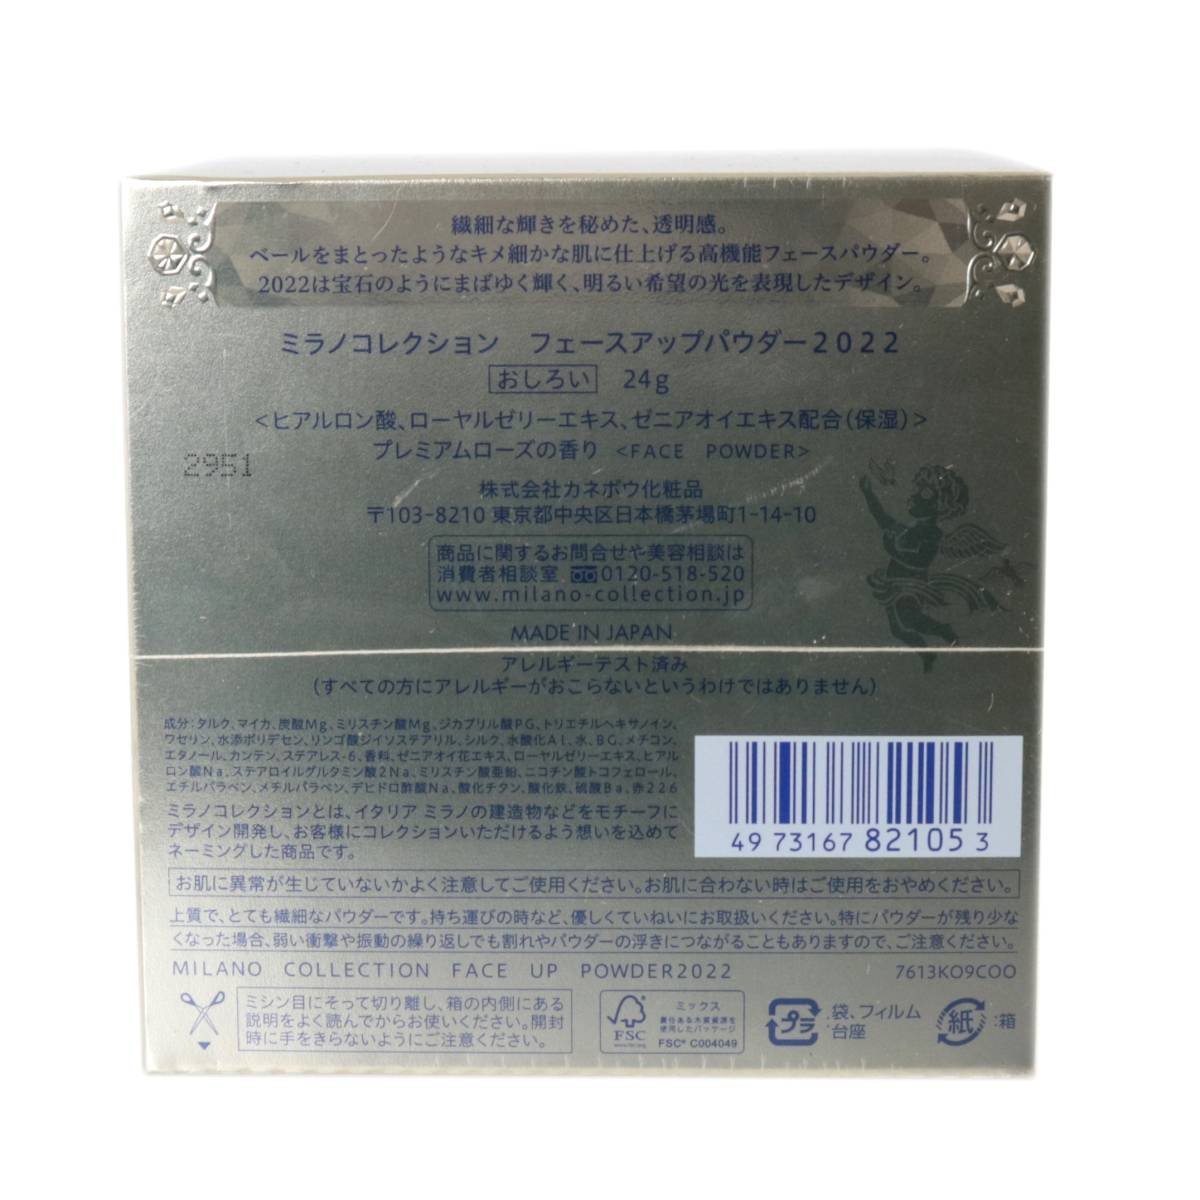 [ used ] Kanebo Milano Collection face up powder 2022 powder 24g NT S rank 